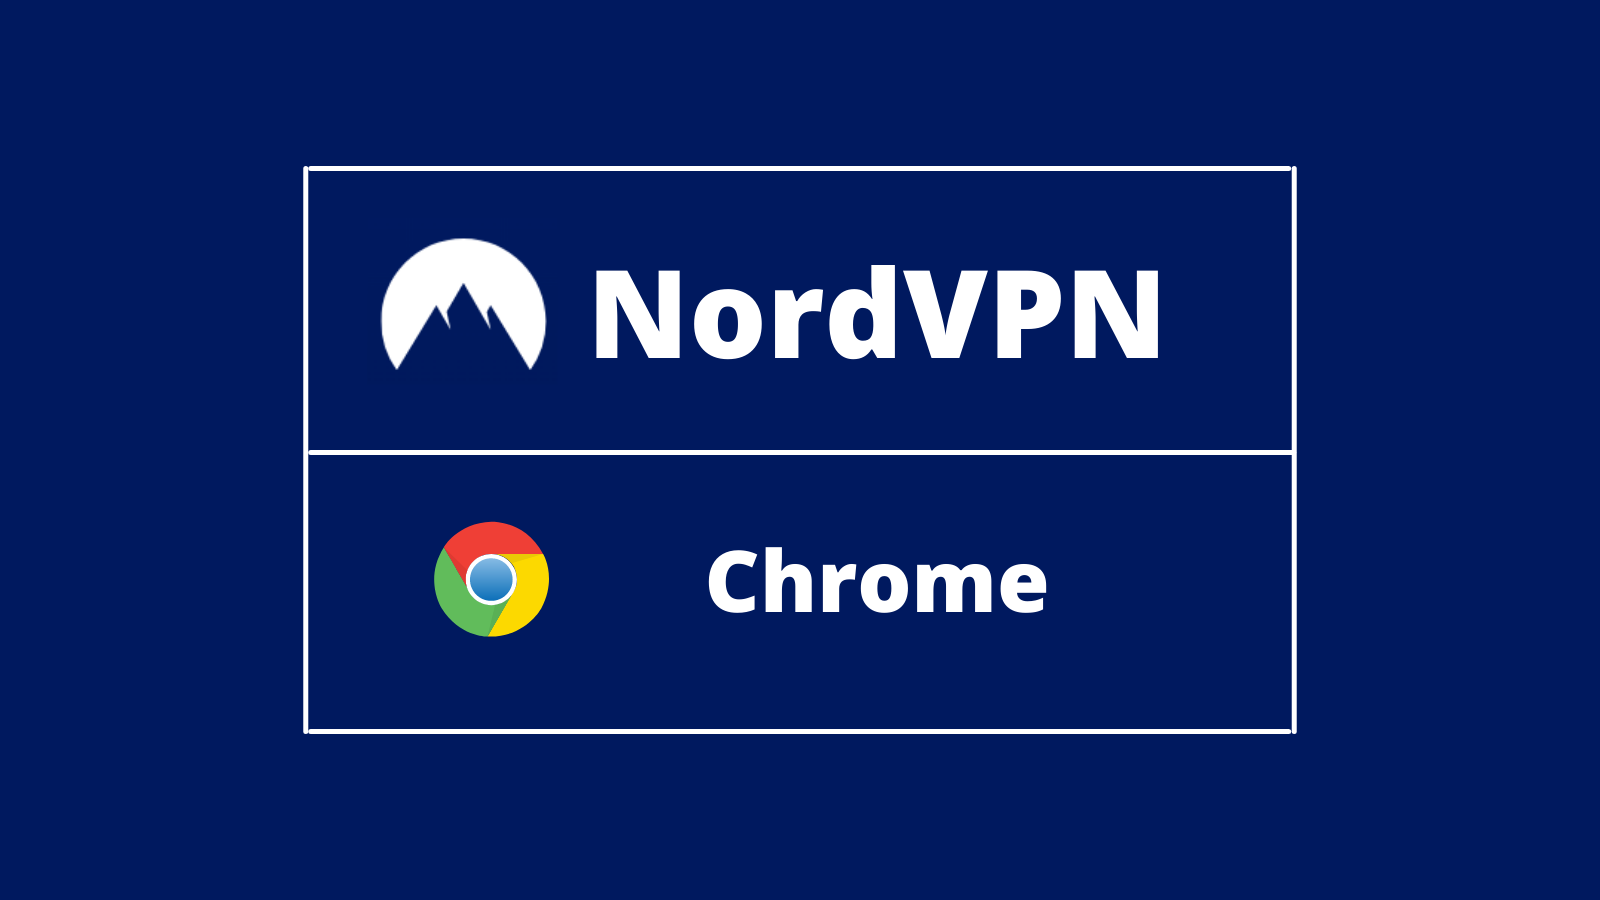 nordvpn chrome download